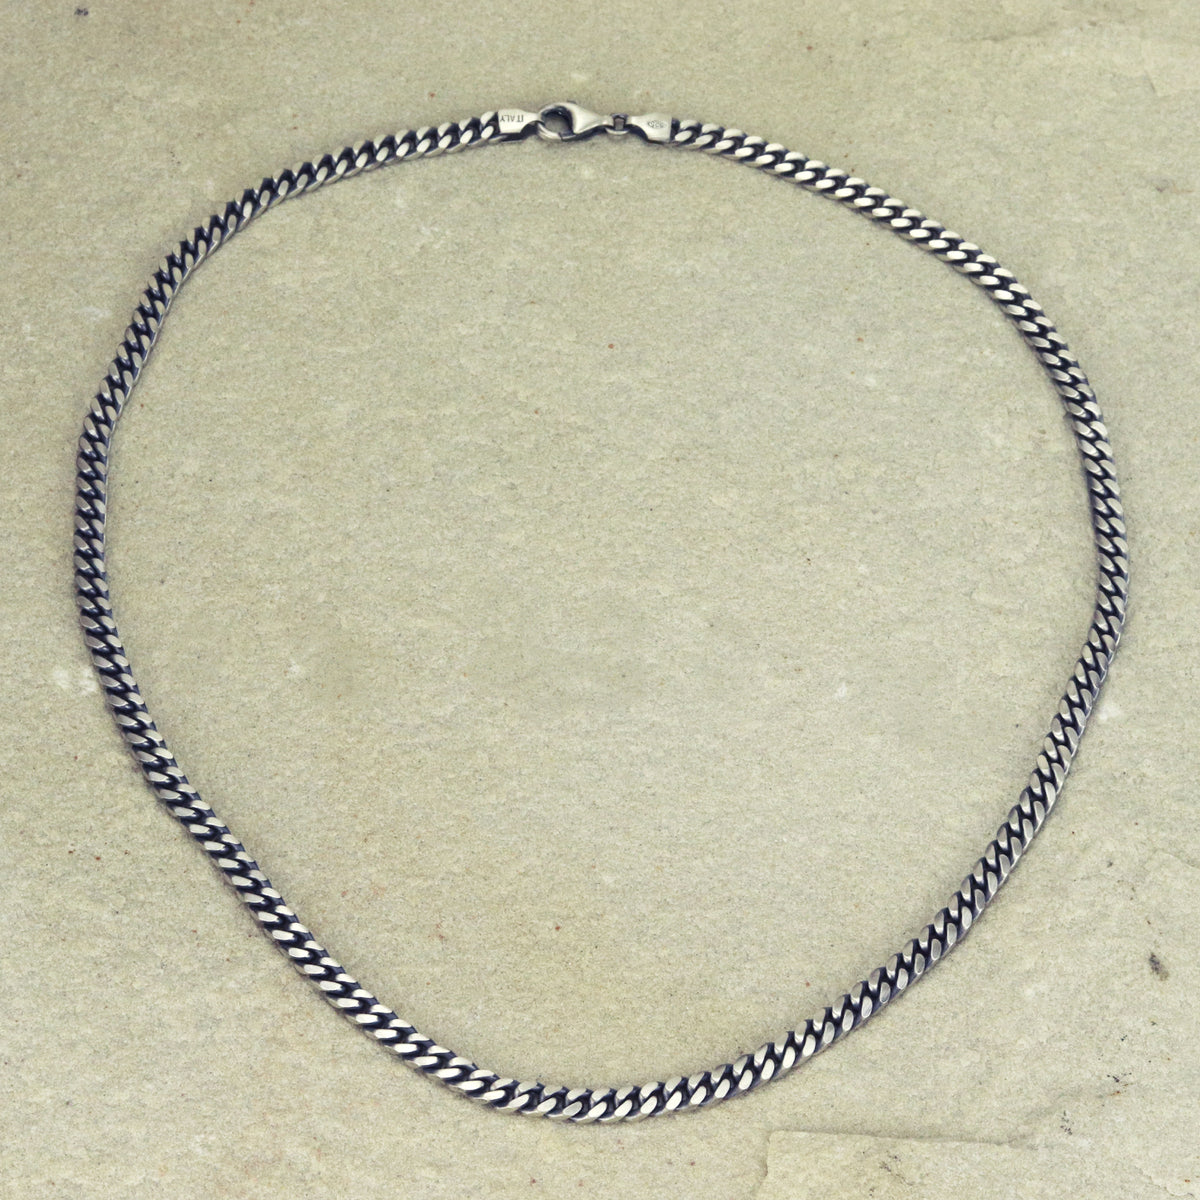 Medium Cuban Chain Necklace